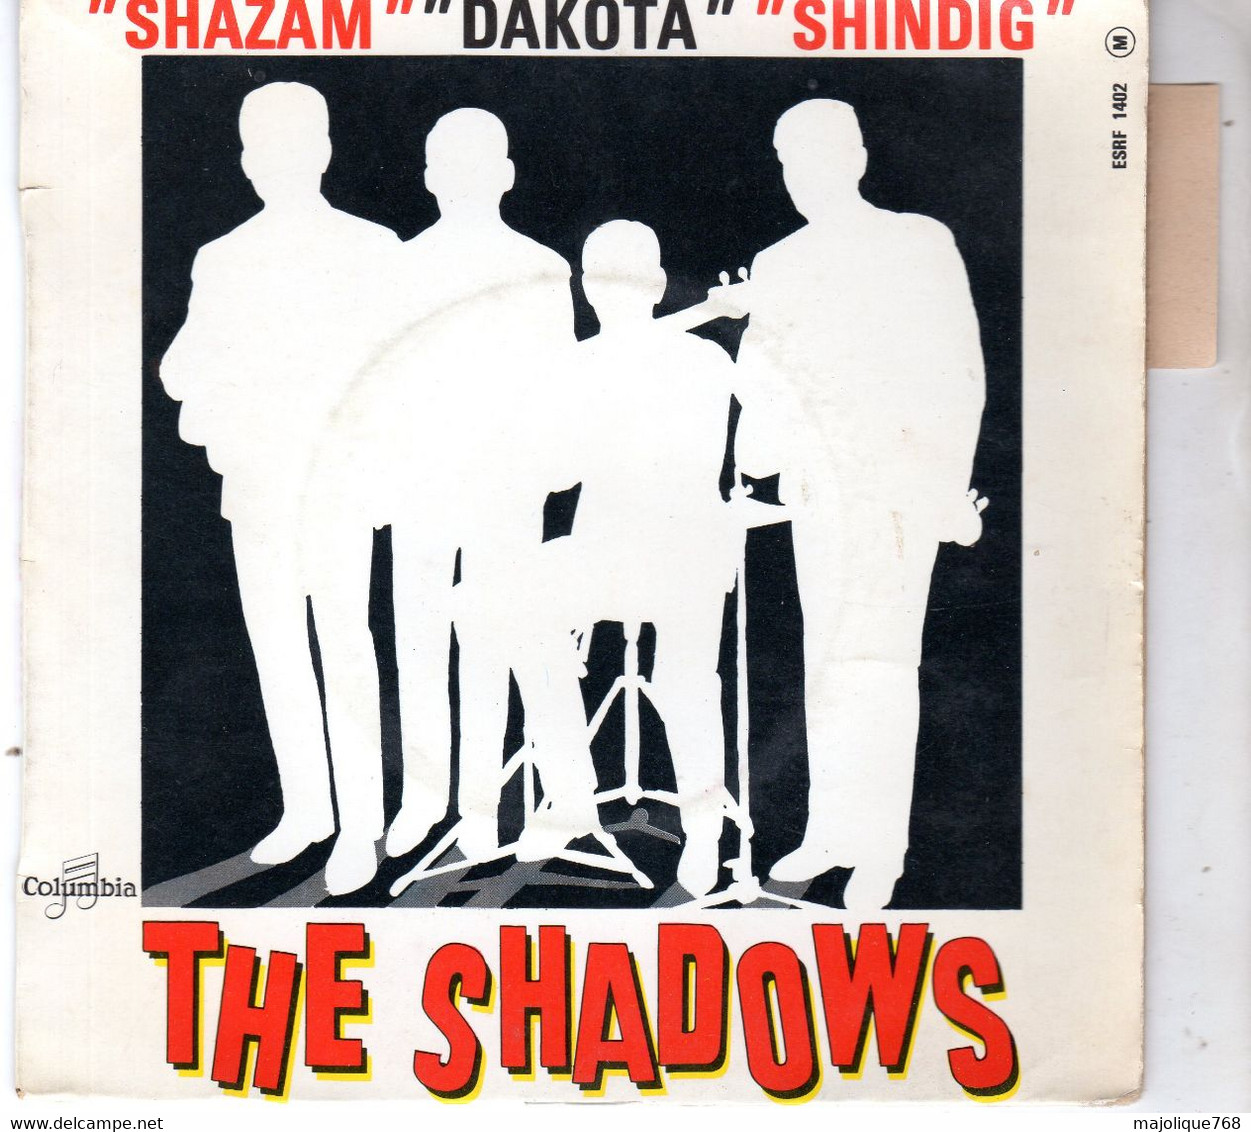 Disque The Shadows - Shazam - Dakota - Columbia ESRF 1402 France 1964 - Instrumental